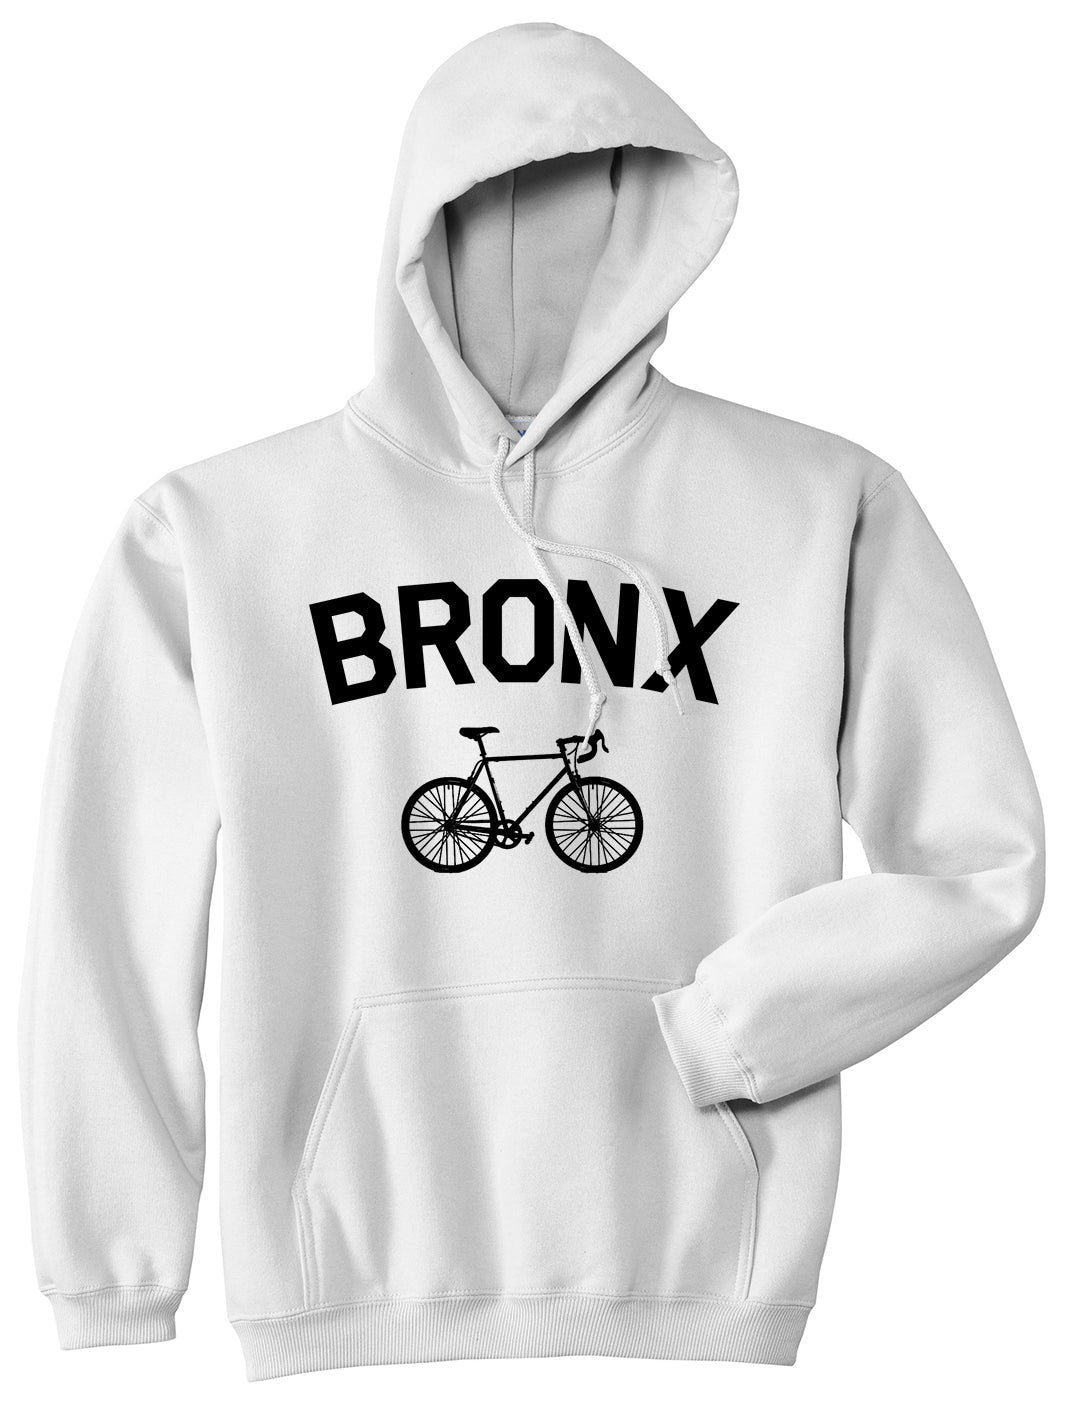 Bronx Vintage Bike Cycling Mens Pullover Hoodie White